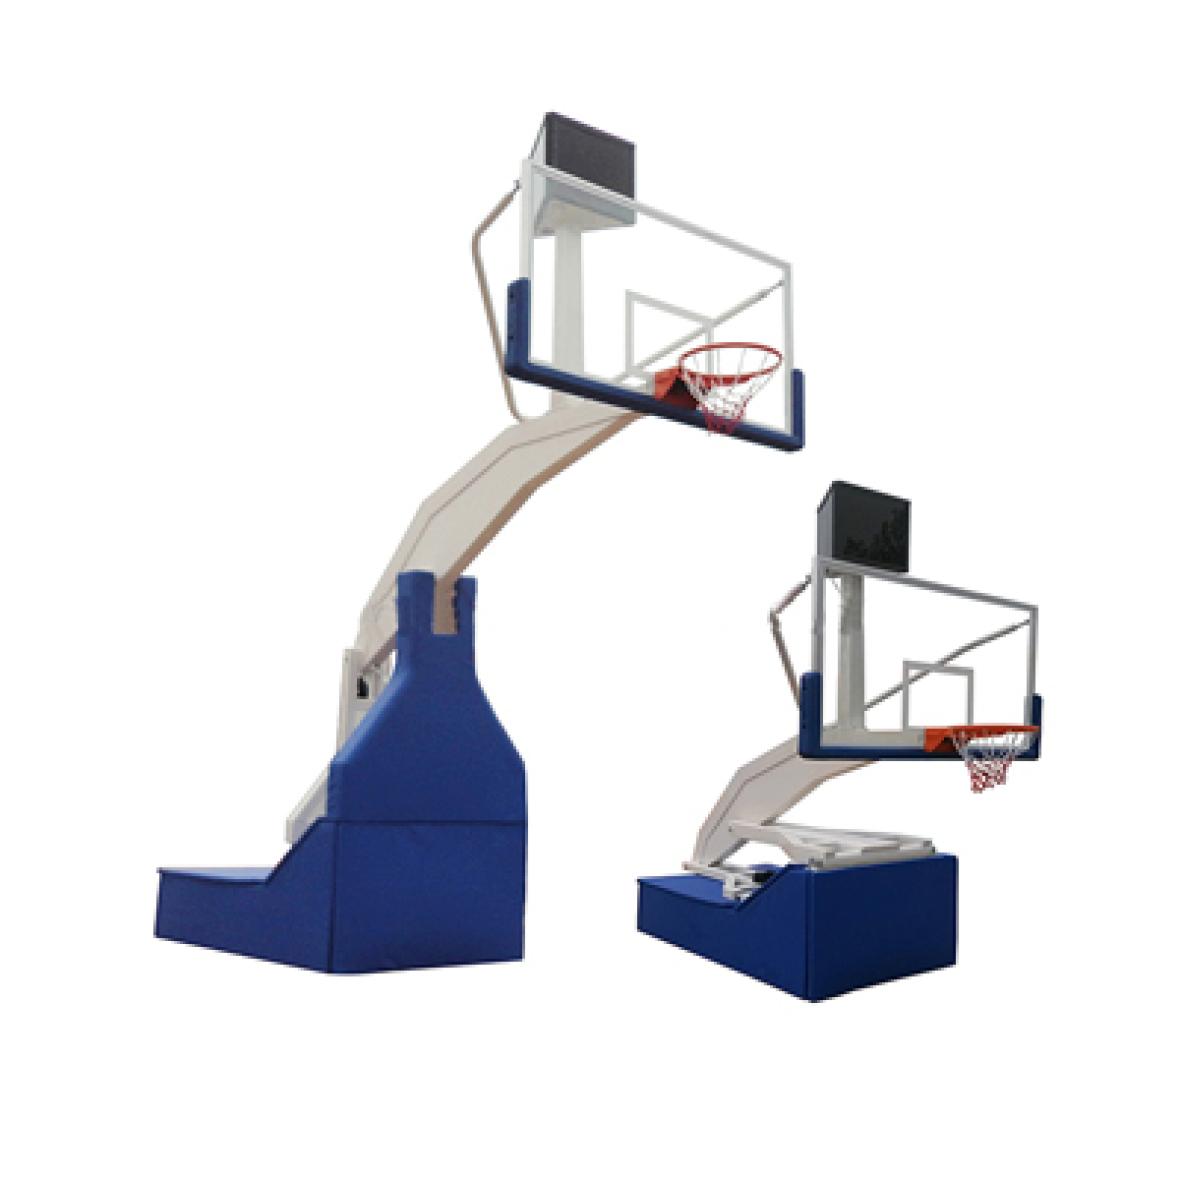 good price and quality Height adjustable basketball stand